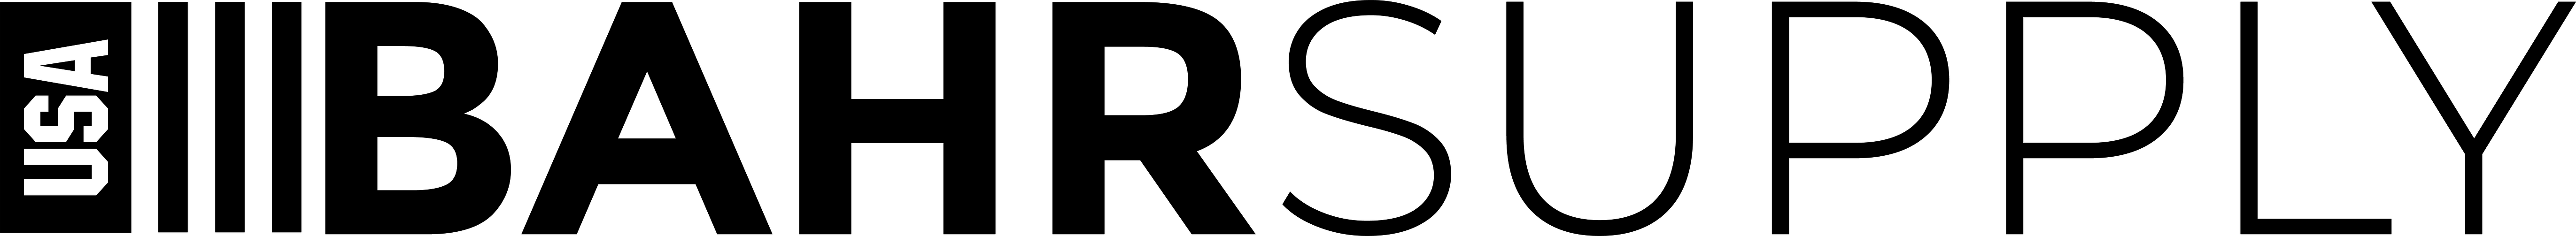 bahr-supply-logo-white-png-1_1